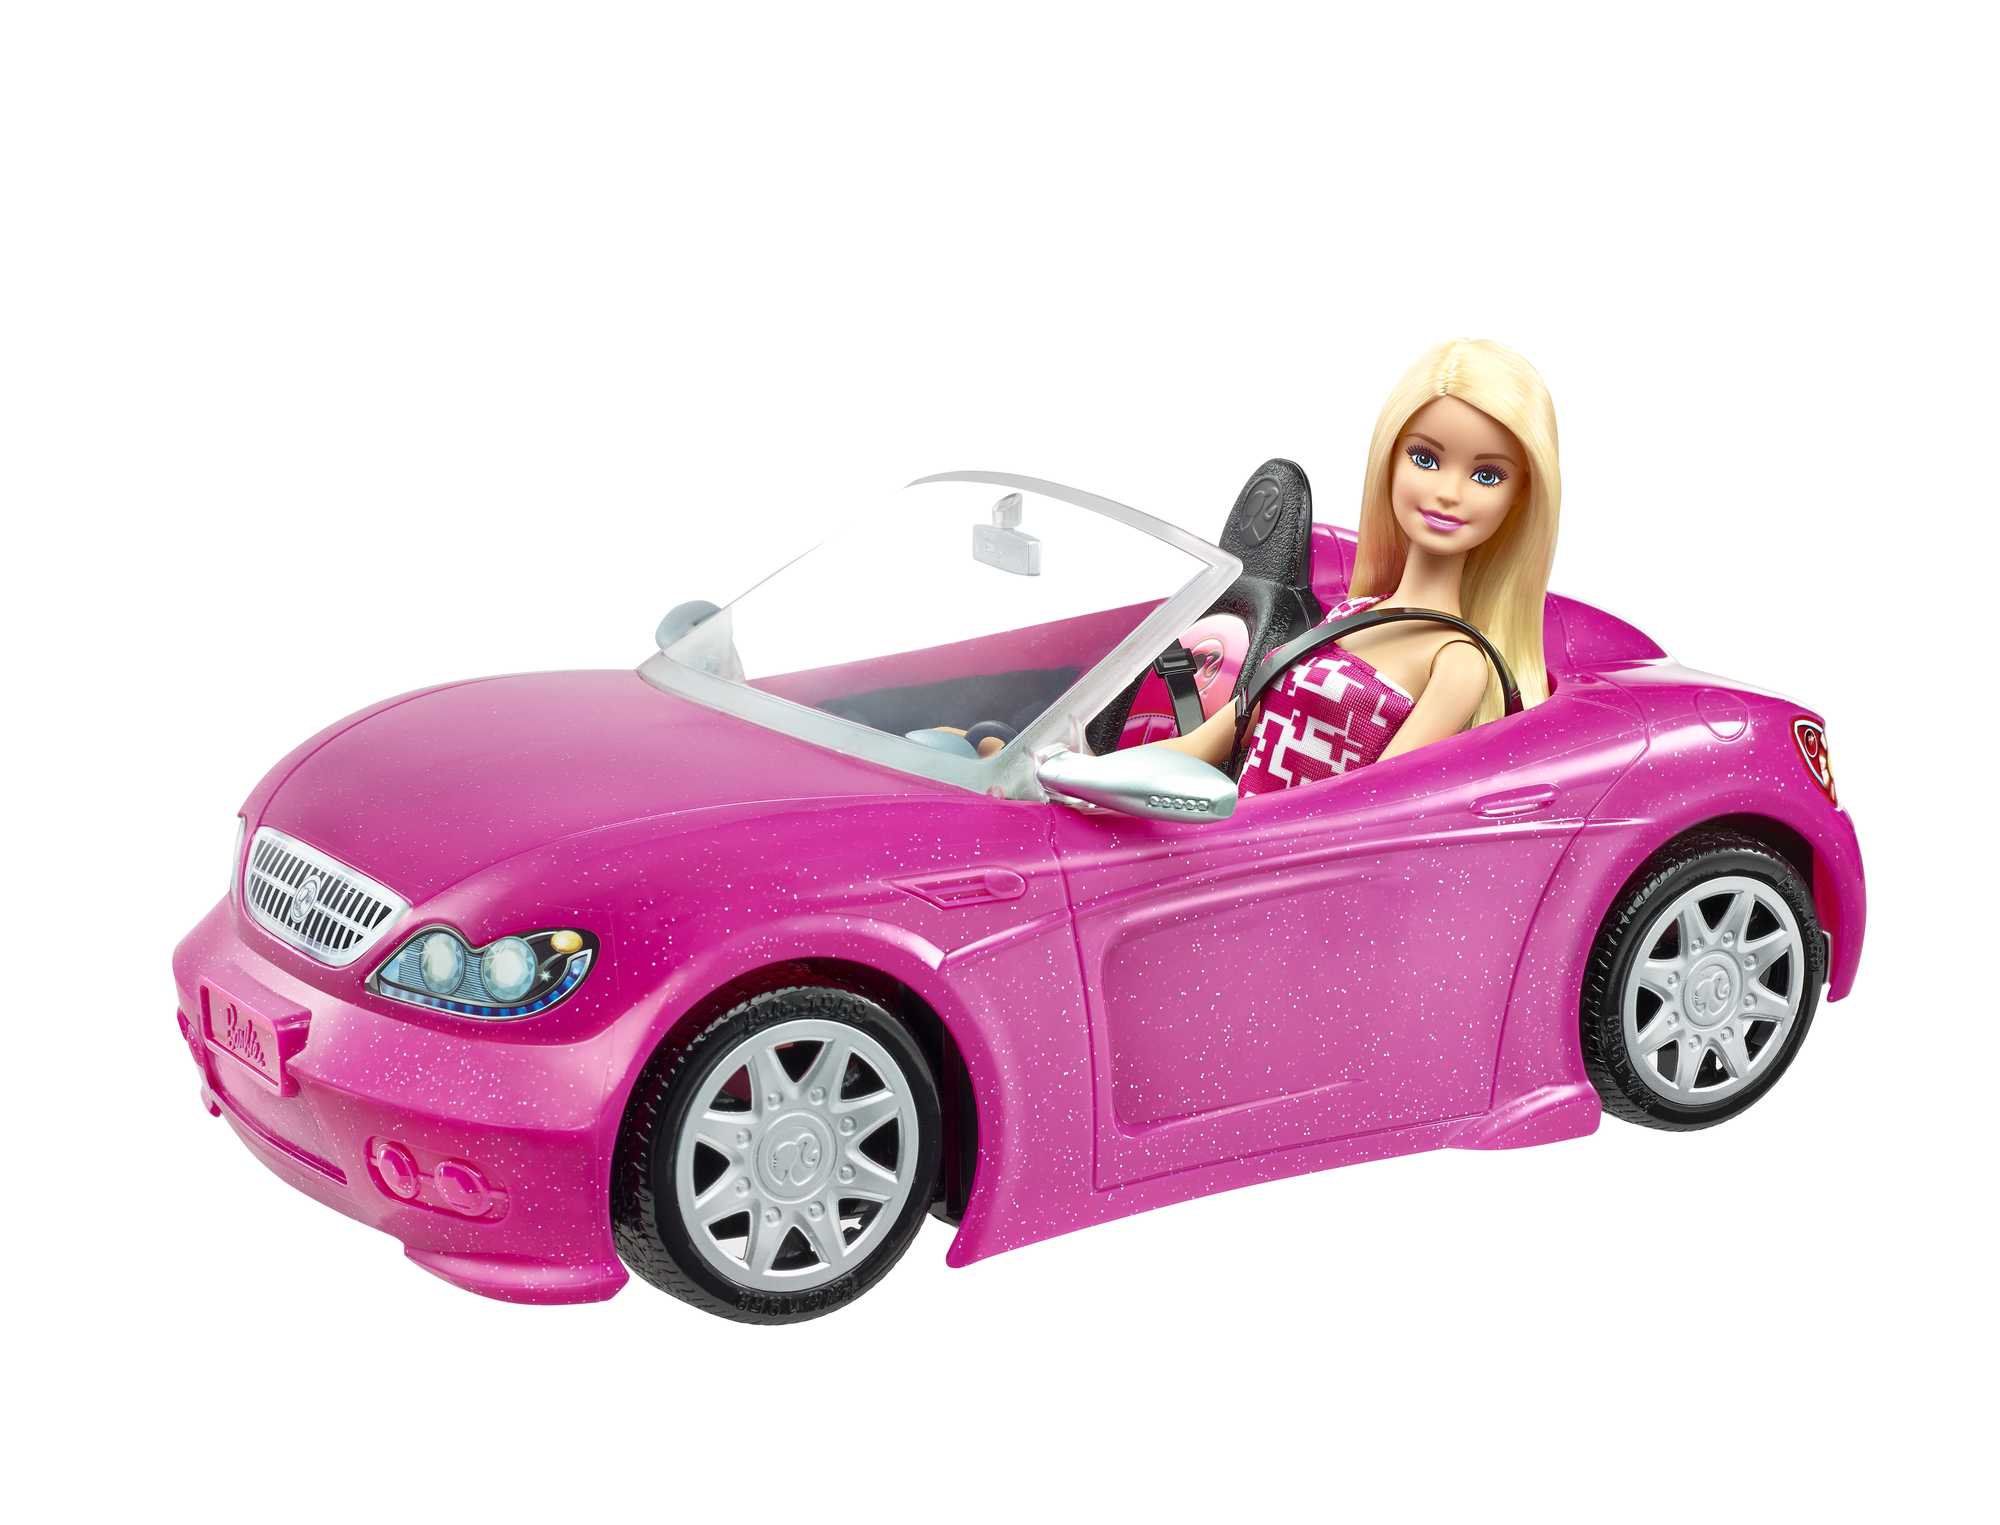 Barbie Doll & Vehicle | Mattel